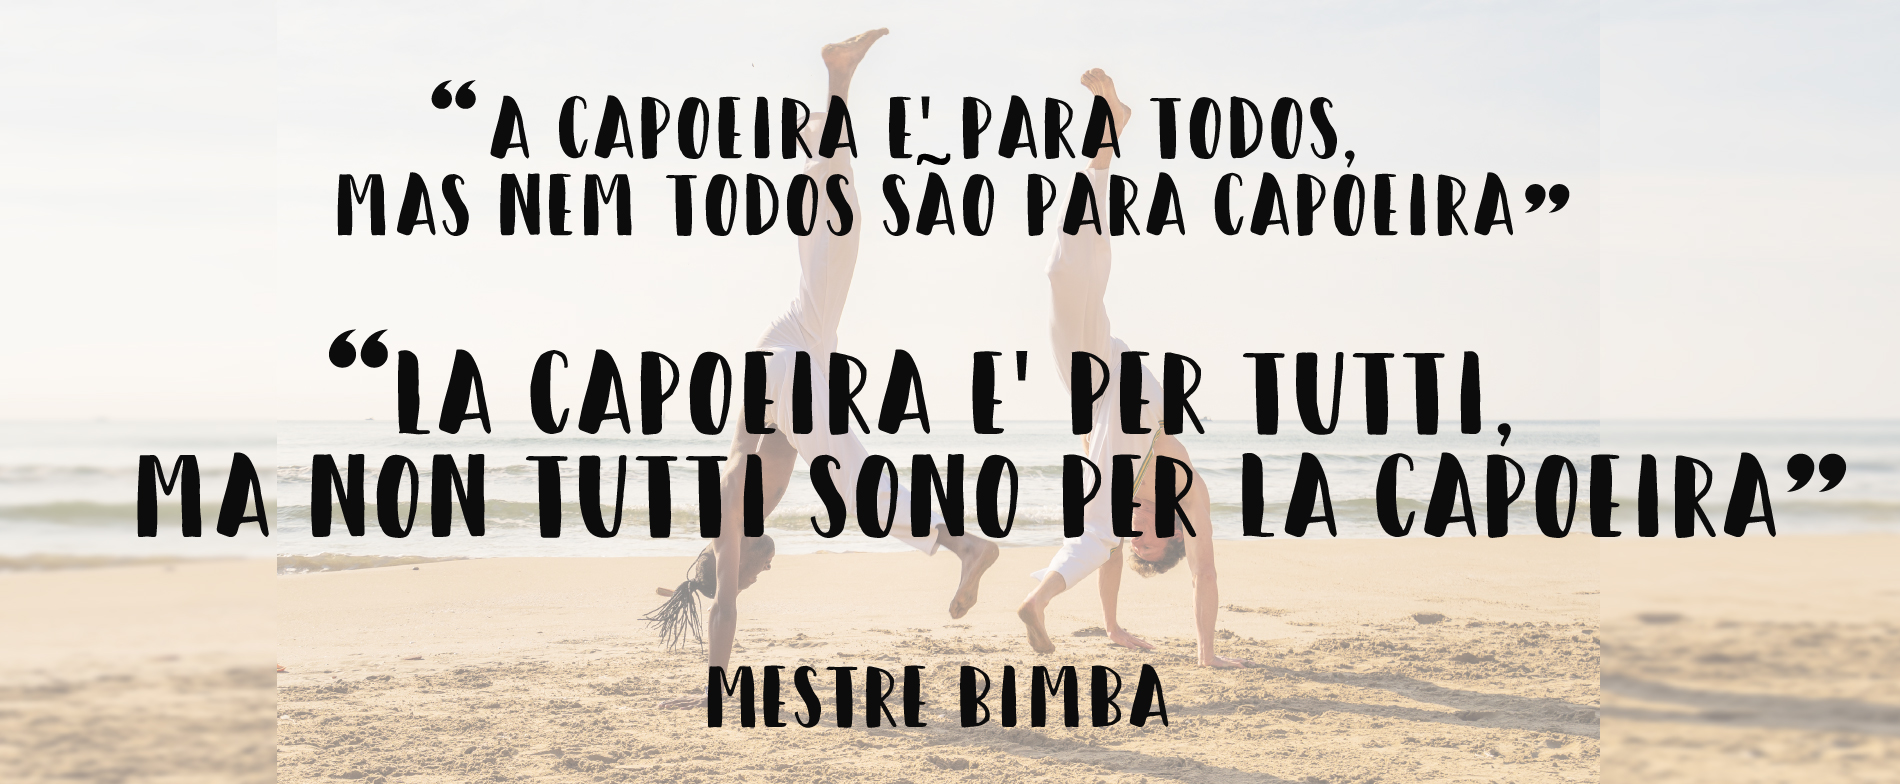 capoeira: frase del Mestre Bimba